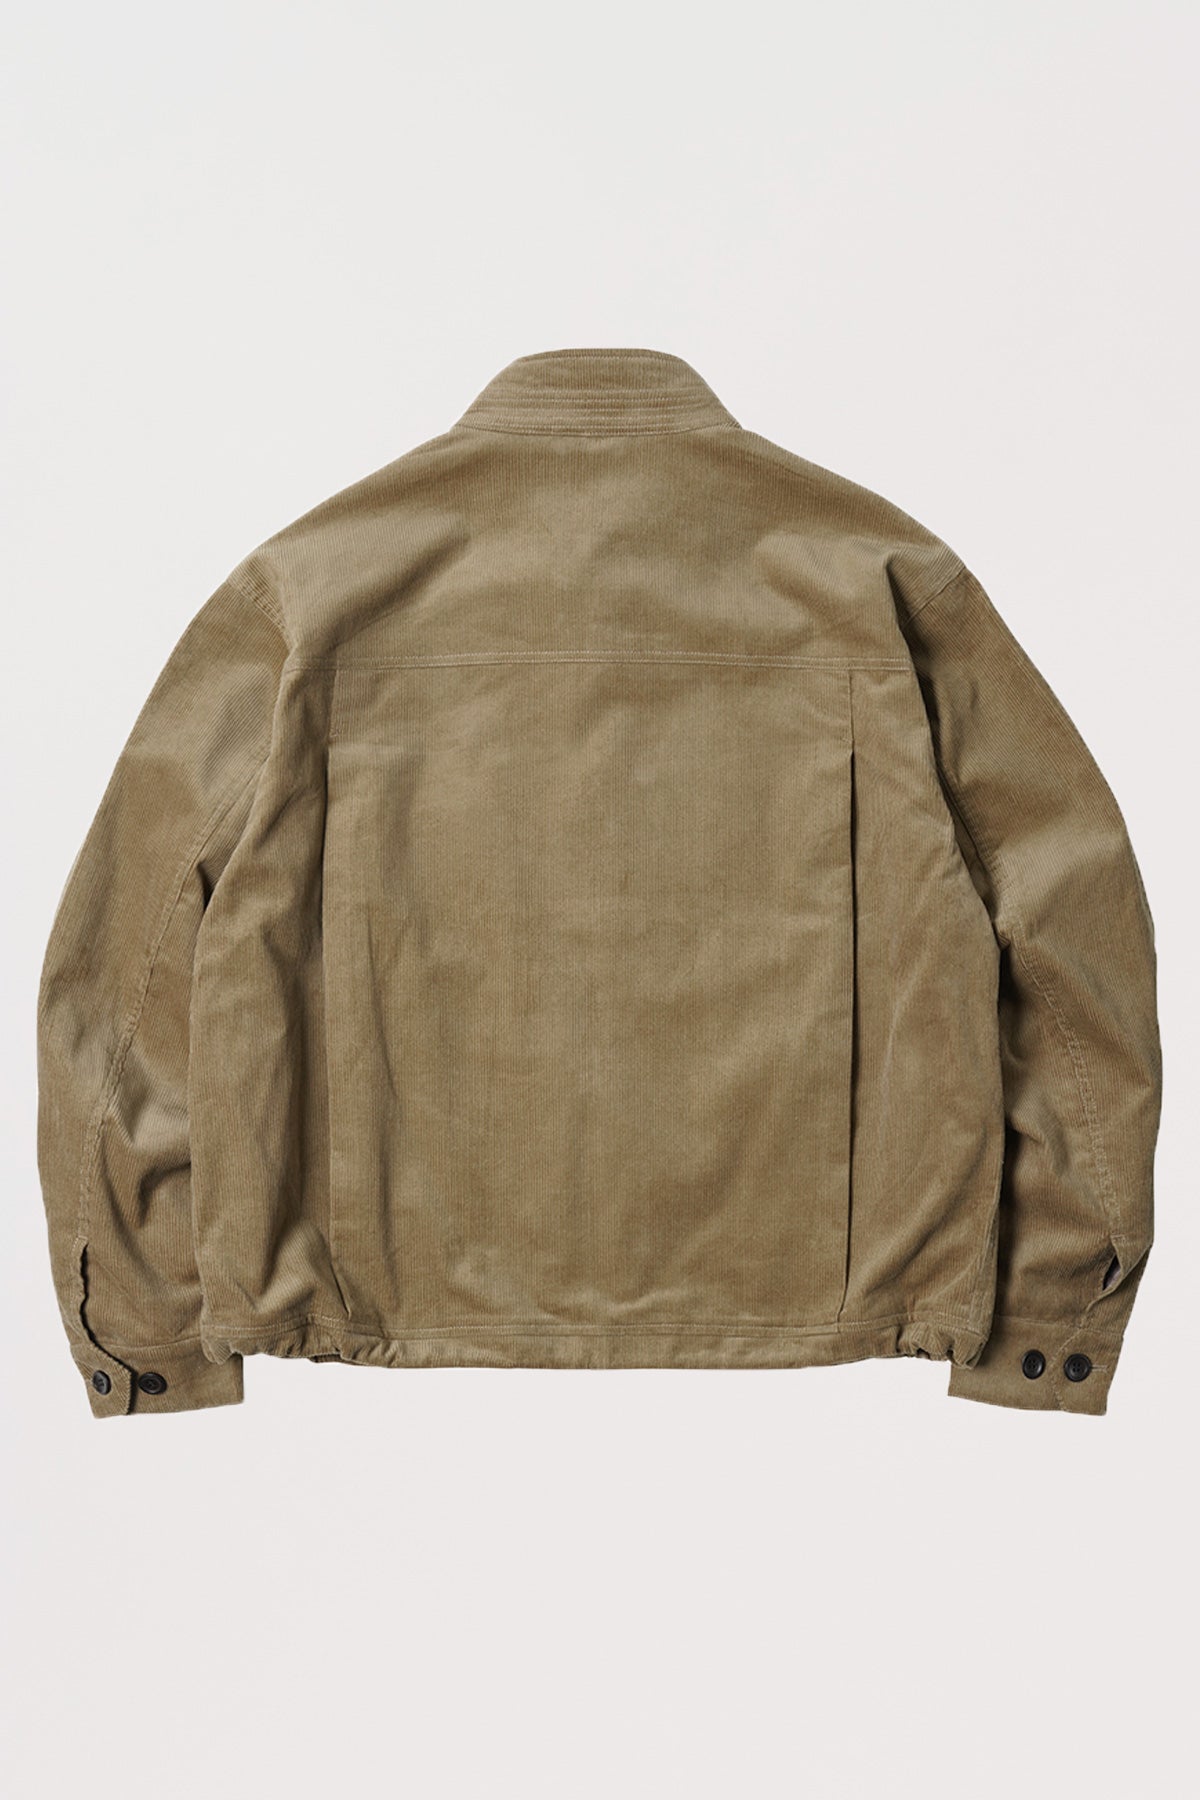 Phlannel Cotton Corduroy G9 Jacket M袖丈55